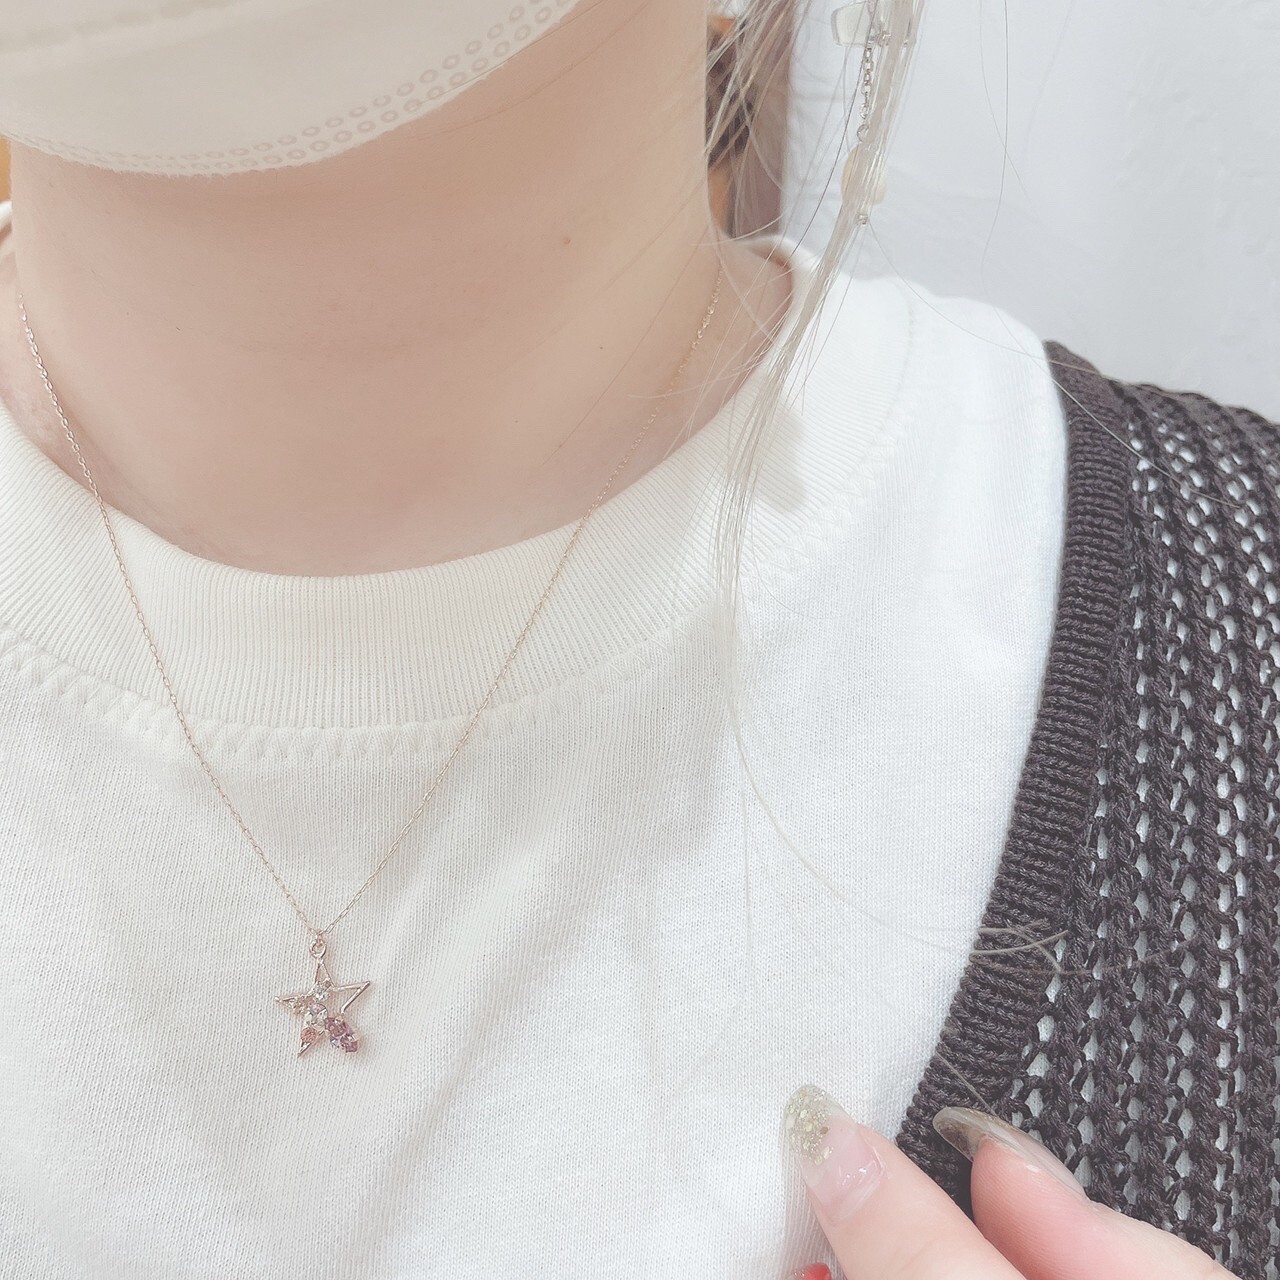 Star Design Necklace 🌟🌟